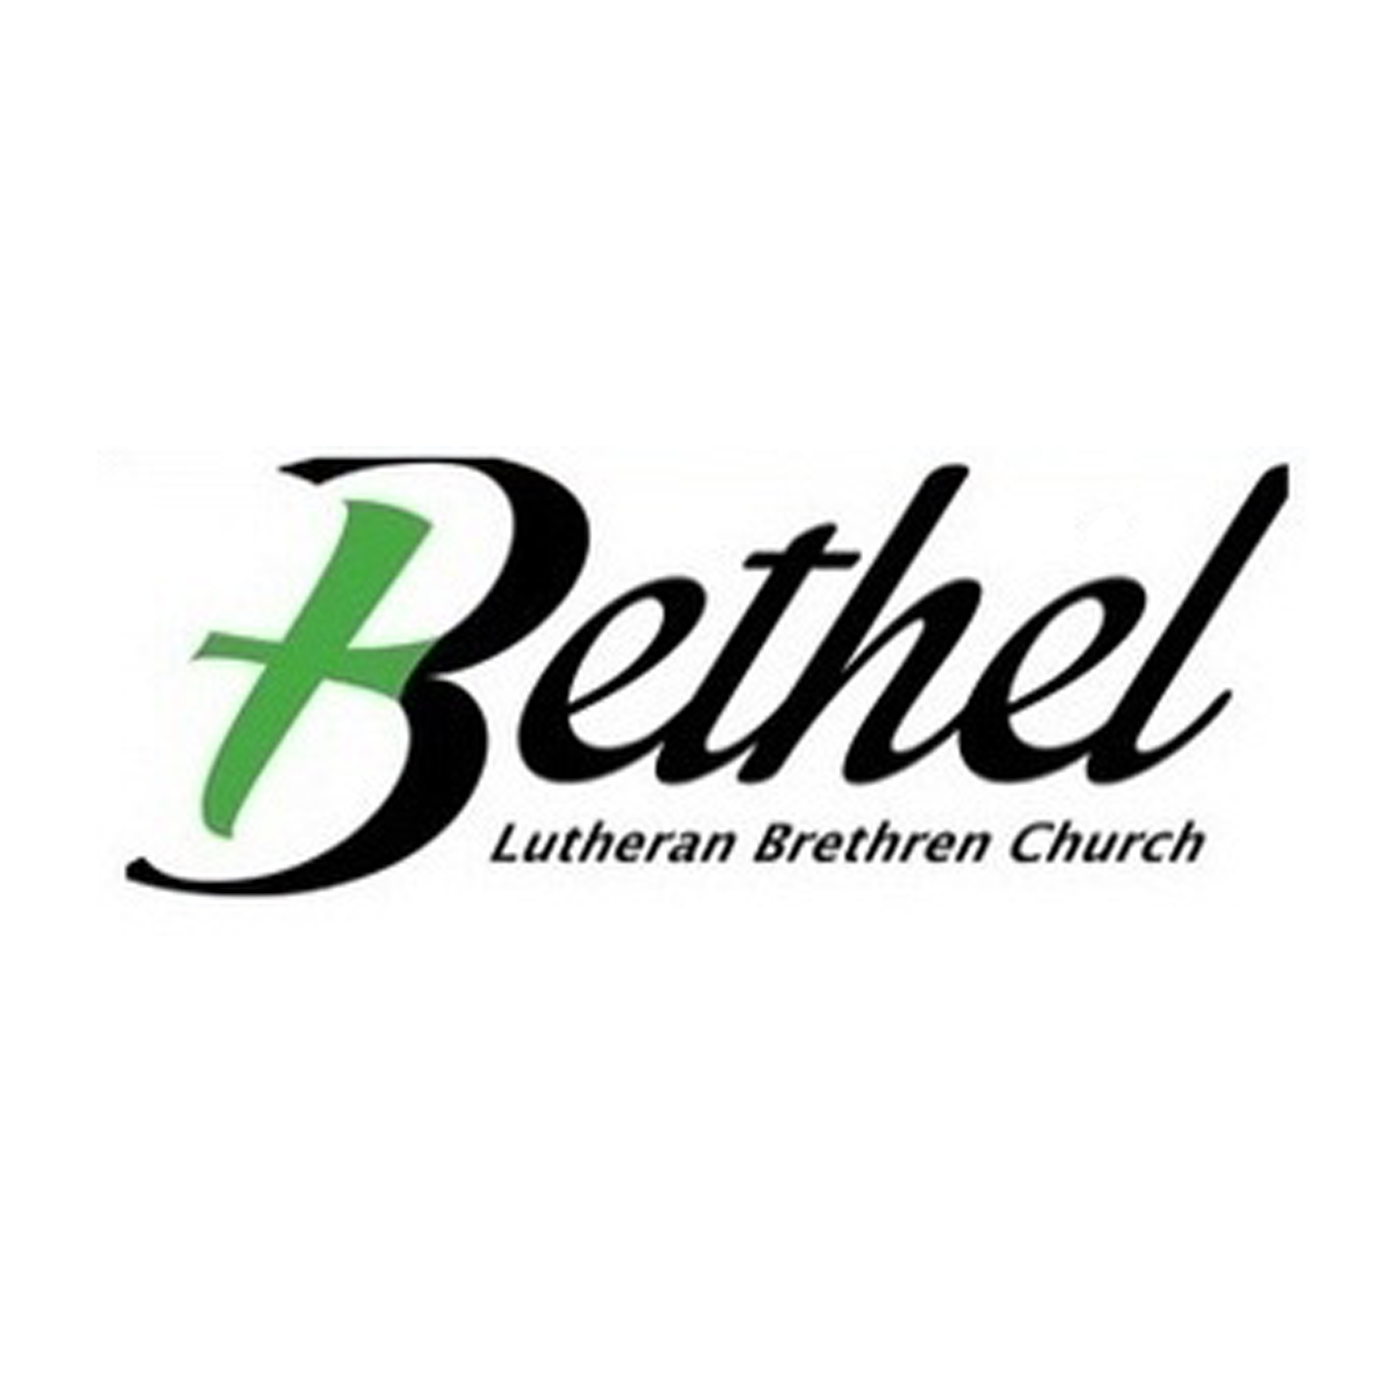 Bethel Lutheran Brethren Church